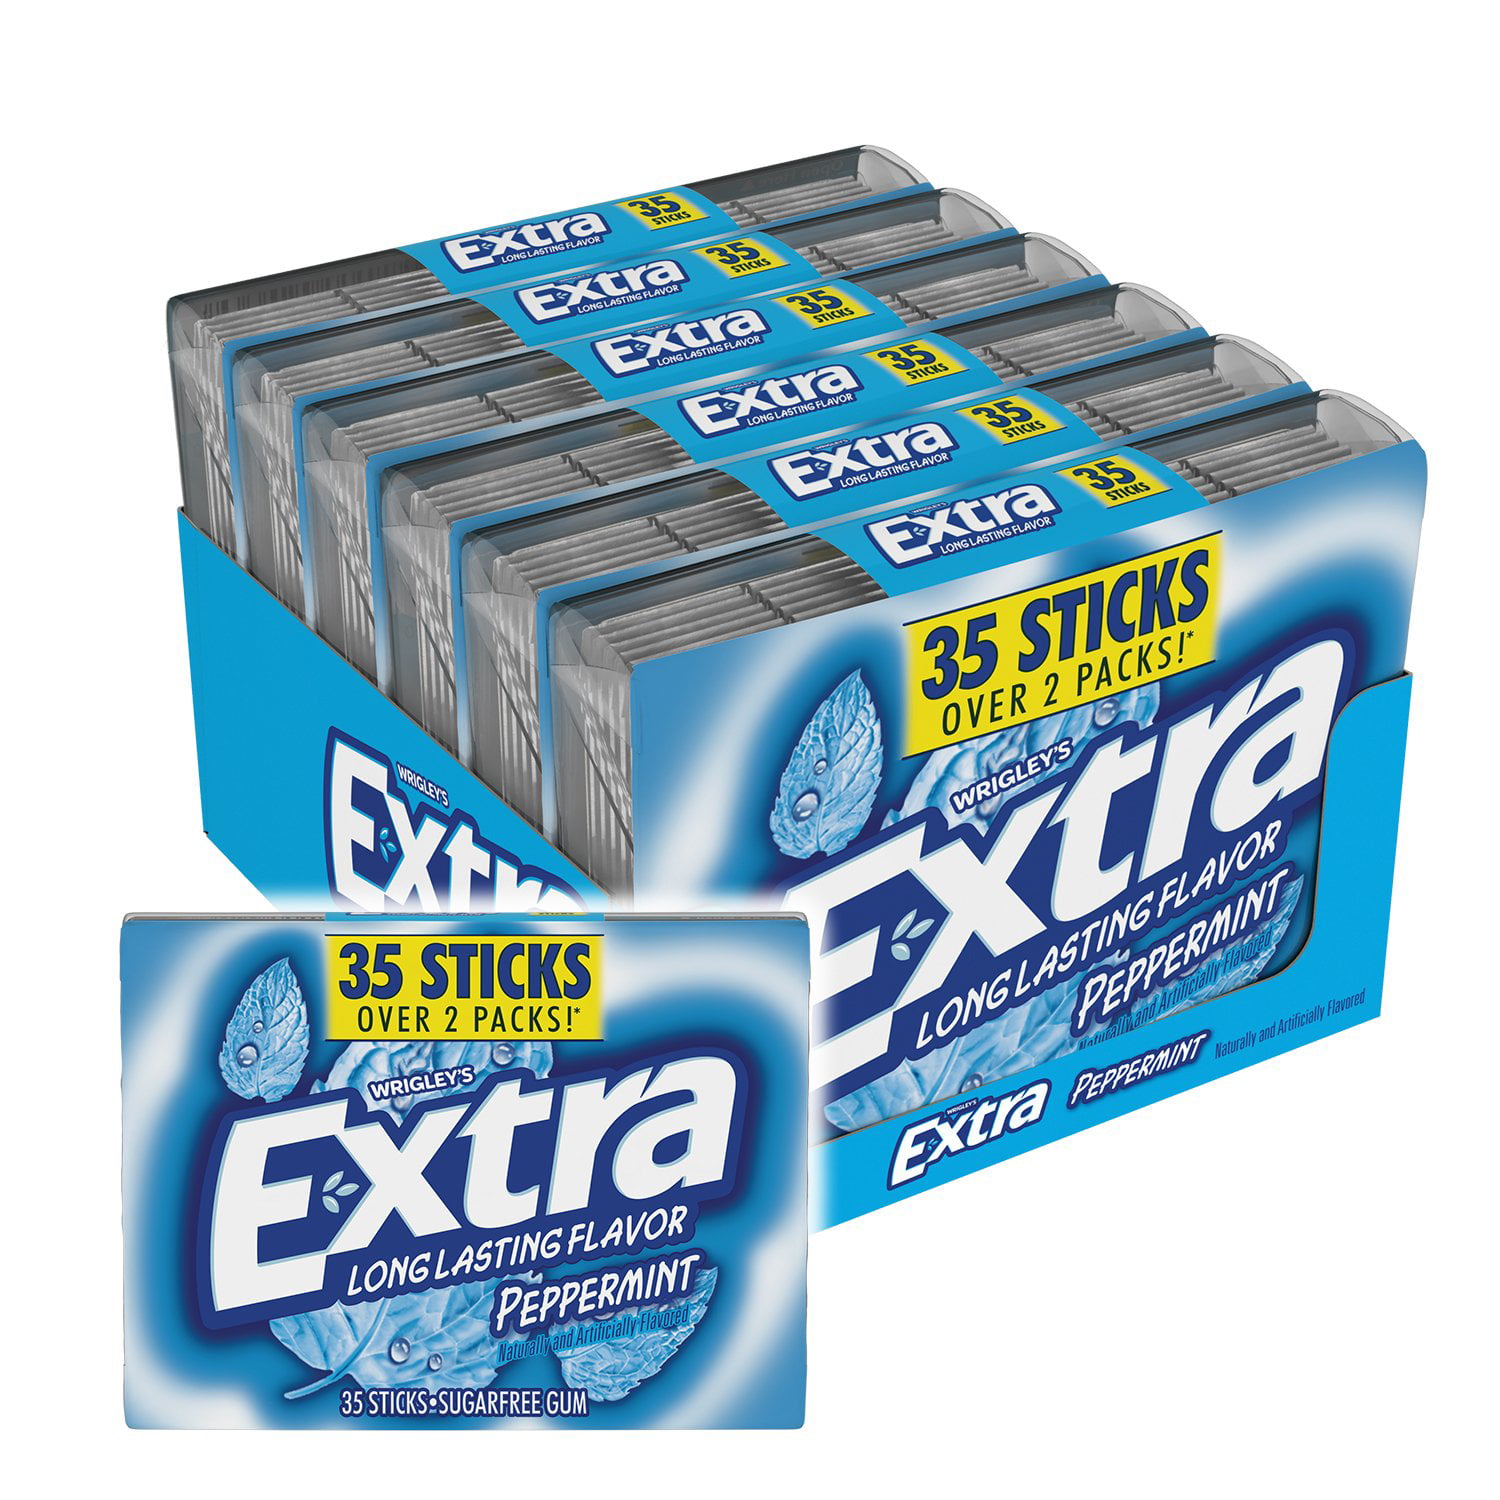 EXTRA Gum Peppermint Sugarfree Chewing Gum Mega Pack, 35 Sticks (Pack